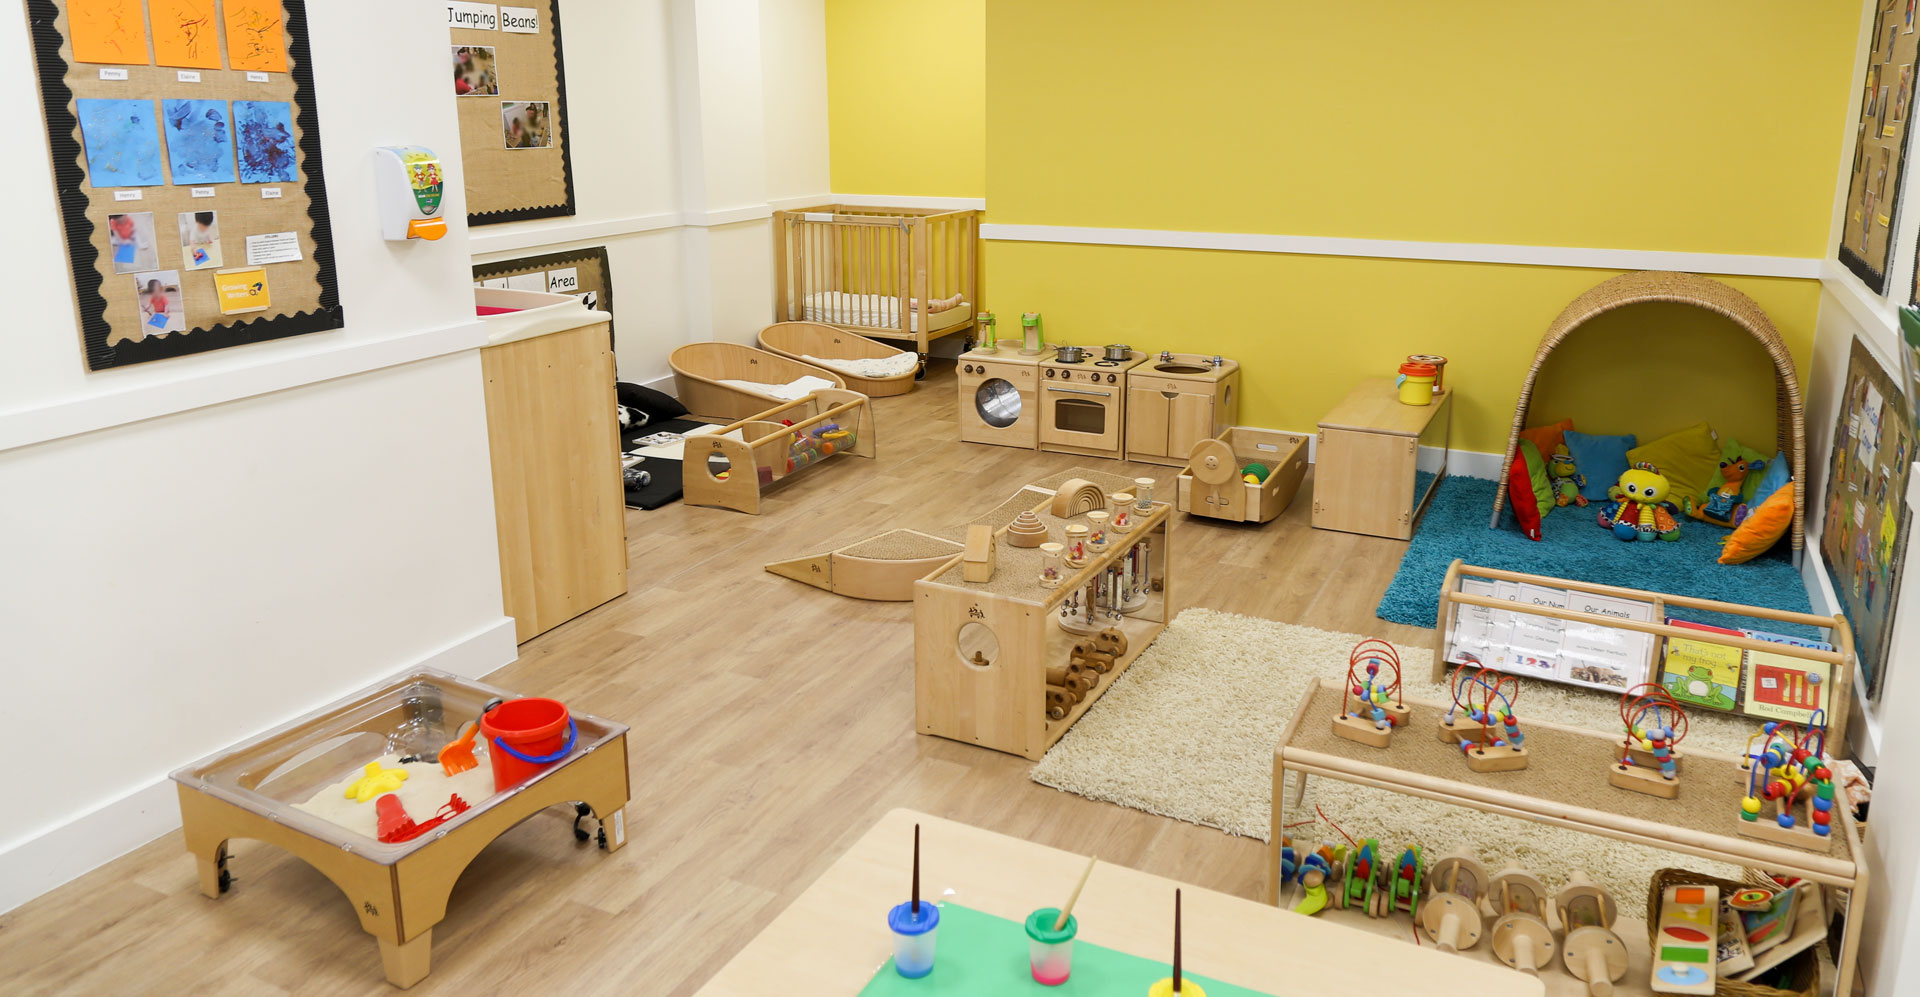 Bank Street Day Nursery and Preschool